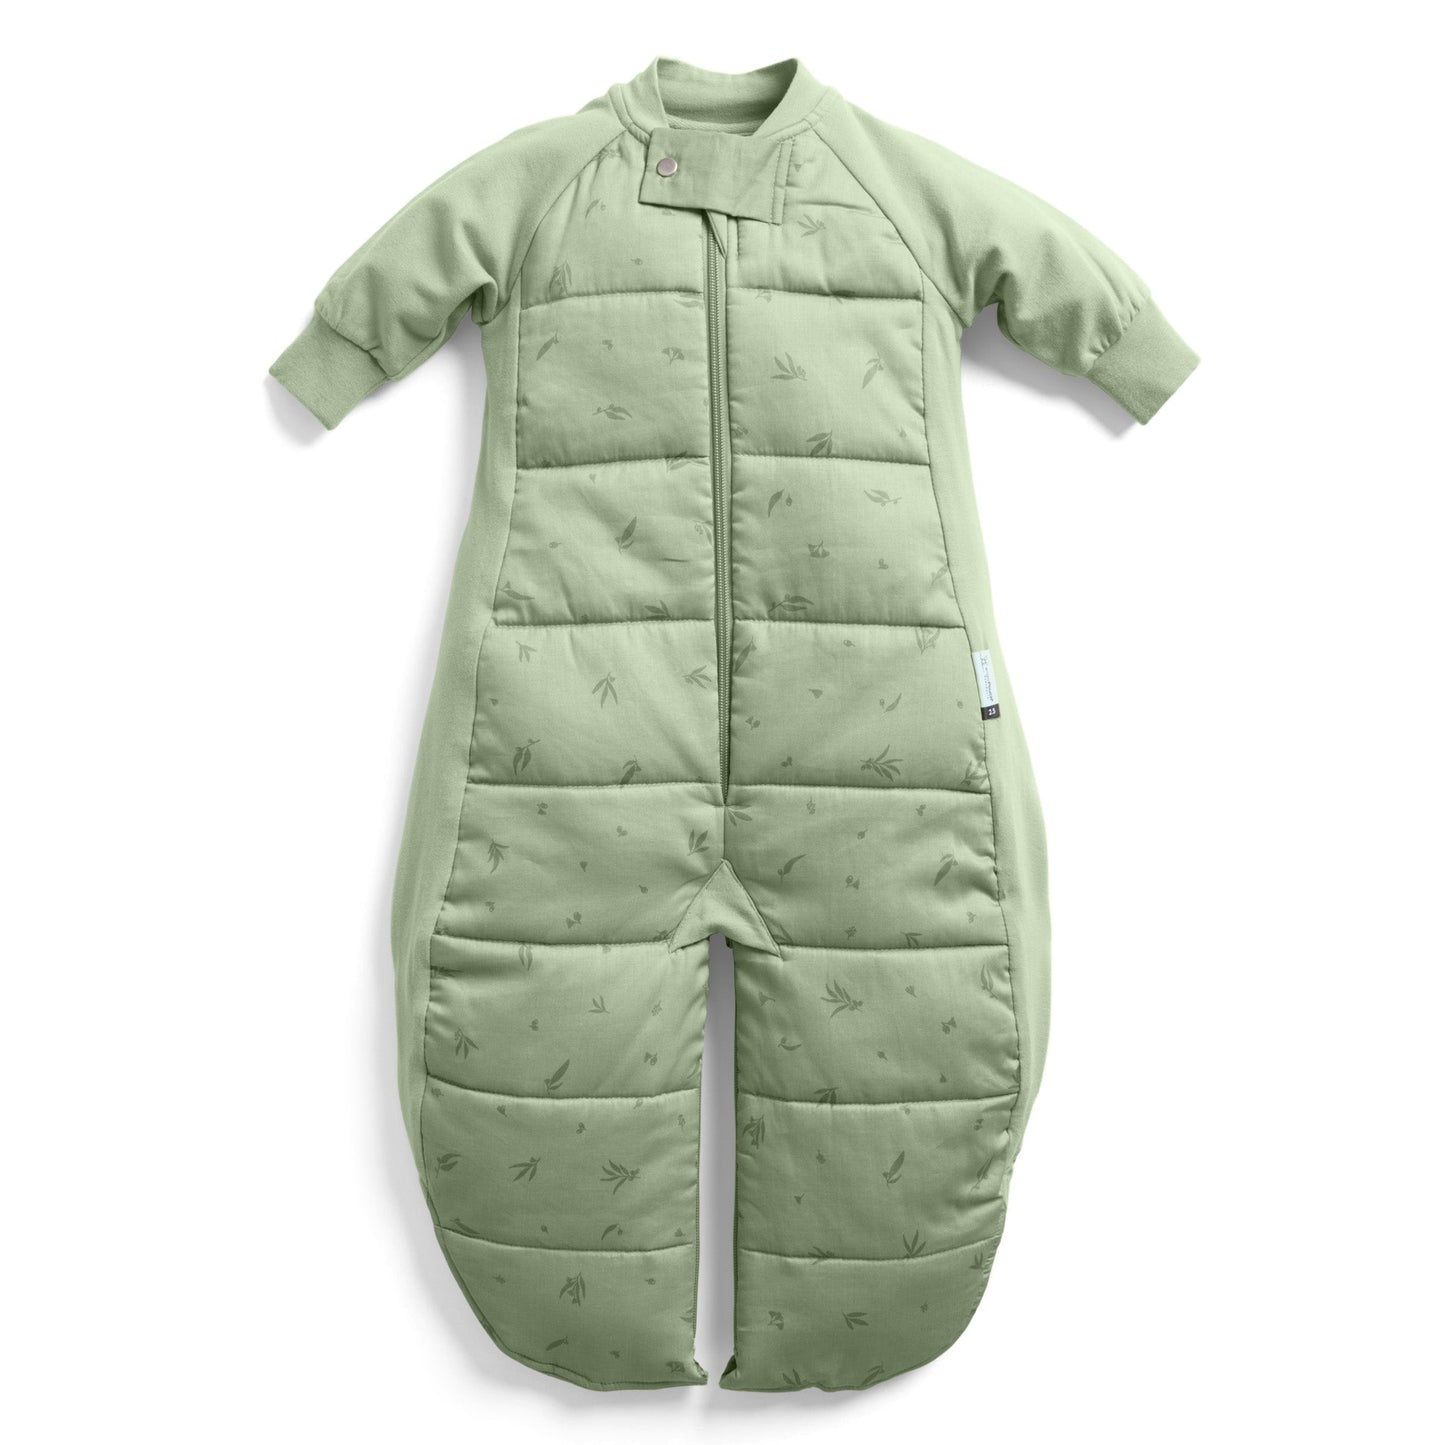 Sleep Suit Bag, 3.5 tog, Willow, 8-24 months